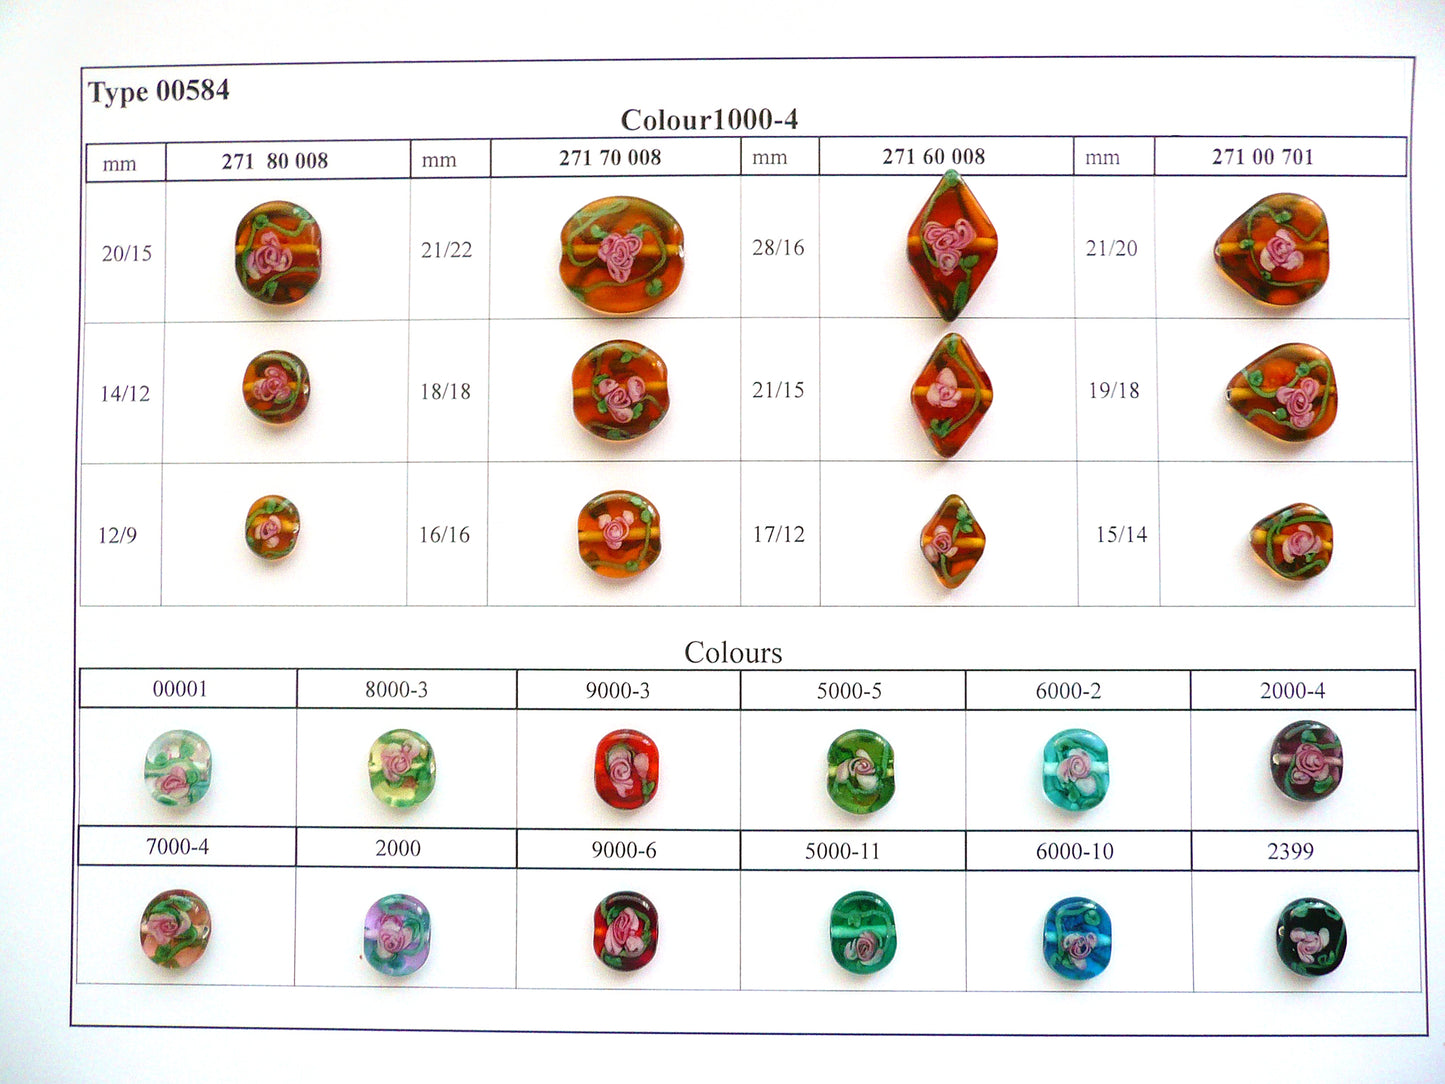 30 pcs Lampwork Beads 584 / Flat Triangle/Teardrop (271-00-701), Handmade, Preciosa Glass, Czech Republic